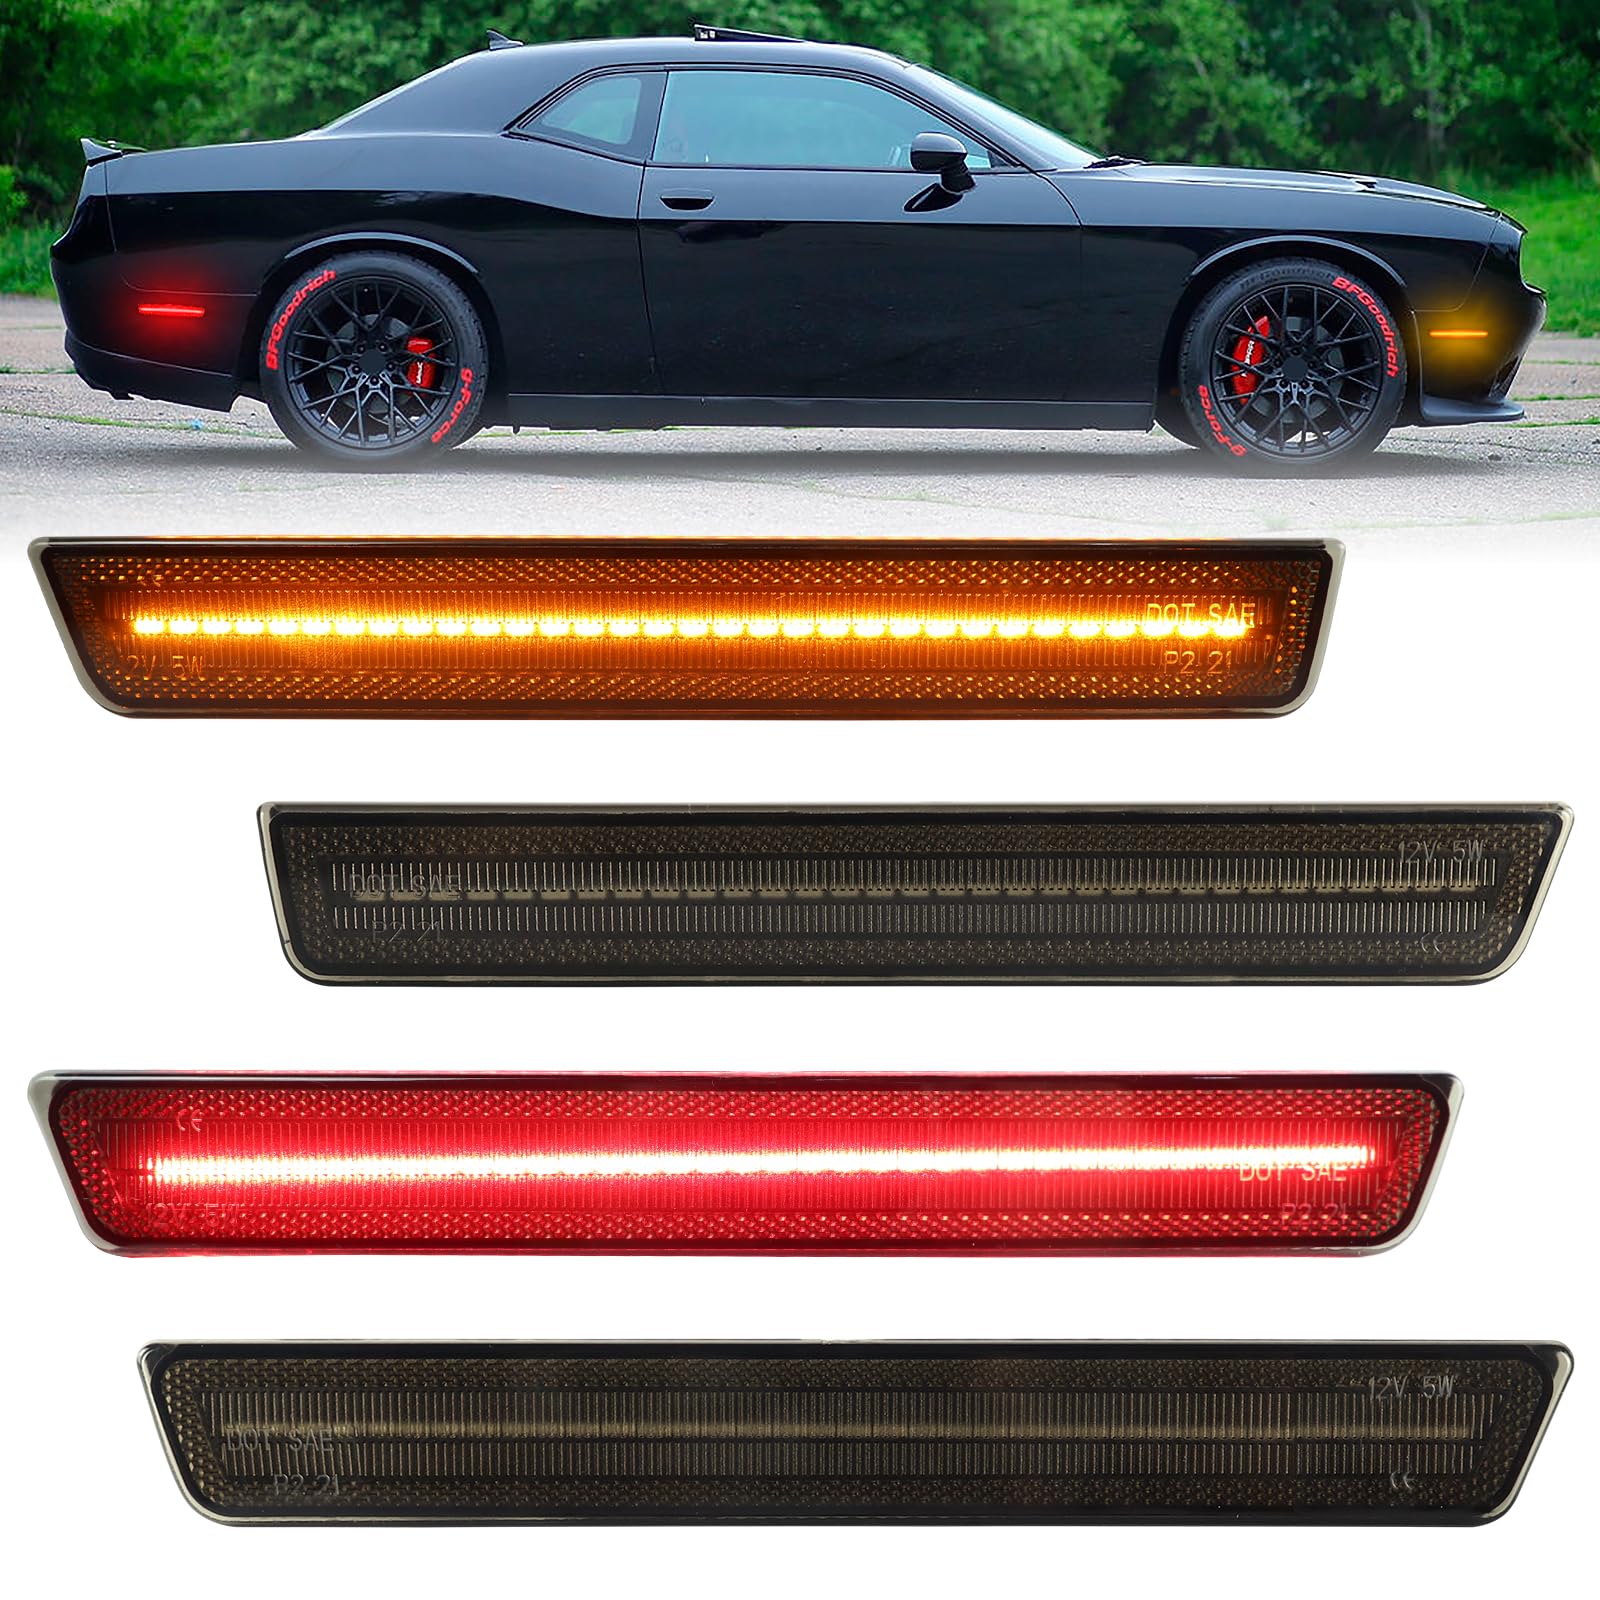 FetonAuto 4PCS LED Side Marker Lights for Dodge Challenger 2015 2016 2017 2018 2019 2020 2021 2022 2023, Smoked Lens Amber Red Front Rear Bumper Marker Lamp von FetonAuto